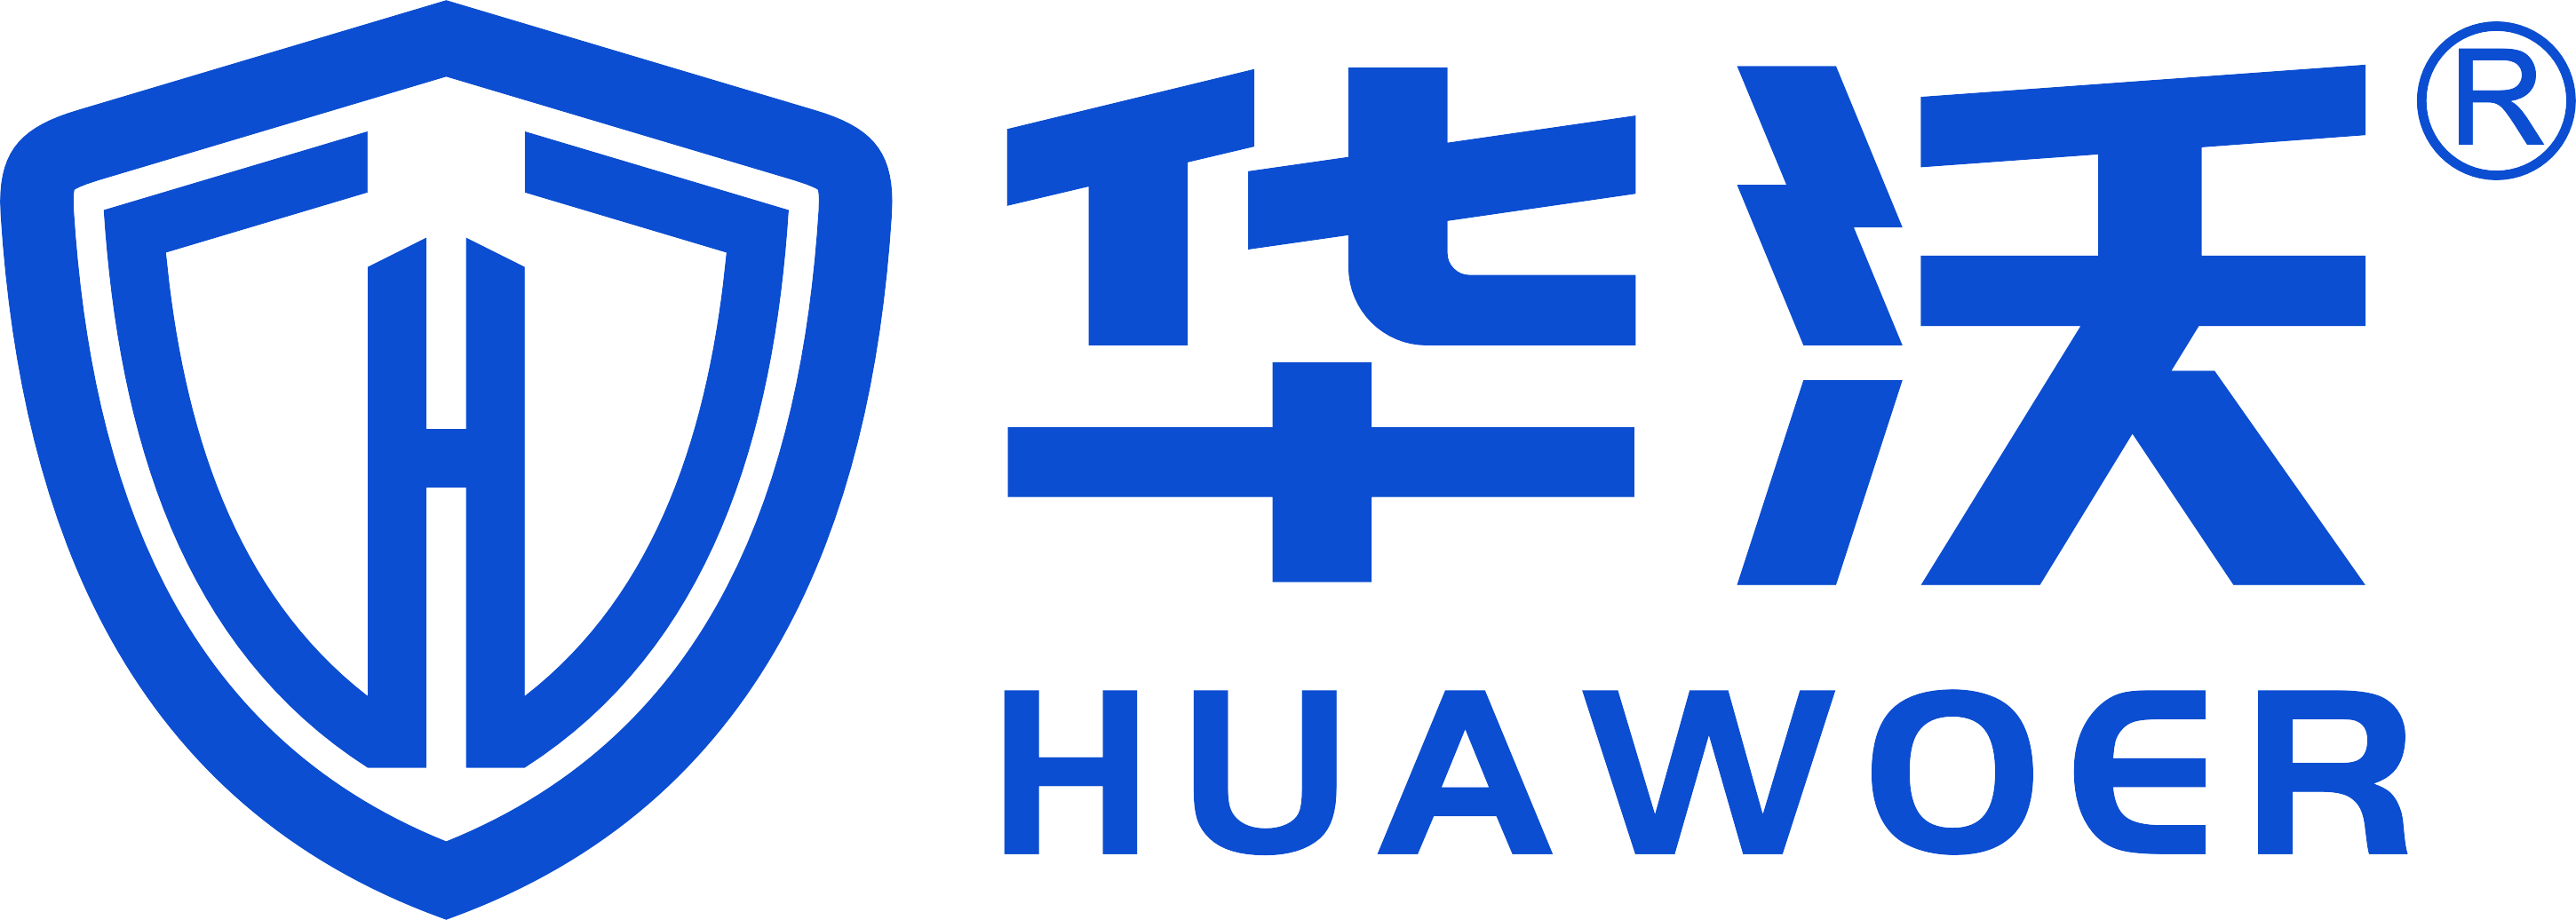 Huawoer Heat-Shrinkable Material Co., Ltd